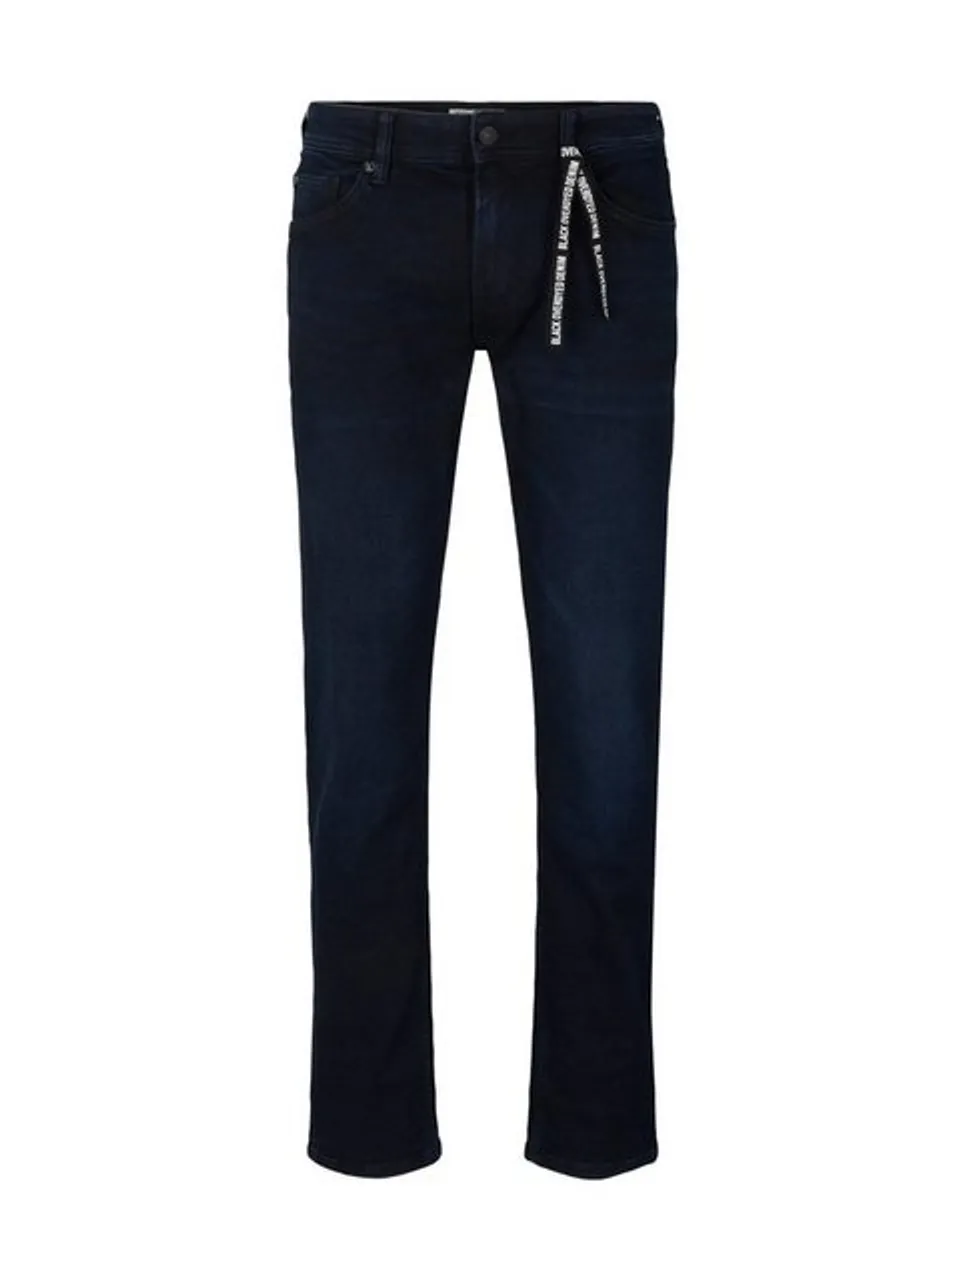 TOM TAILOR Denim Slim-fit-Jeans slim PIERS blue black denim